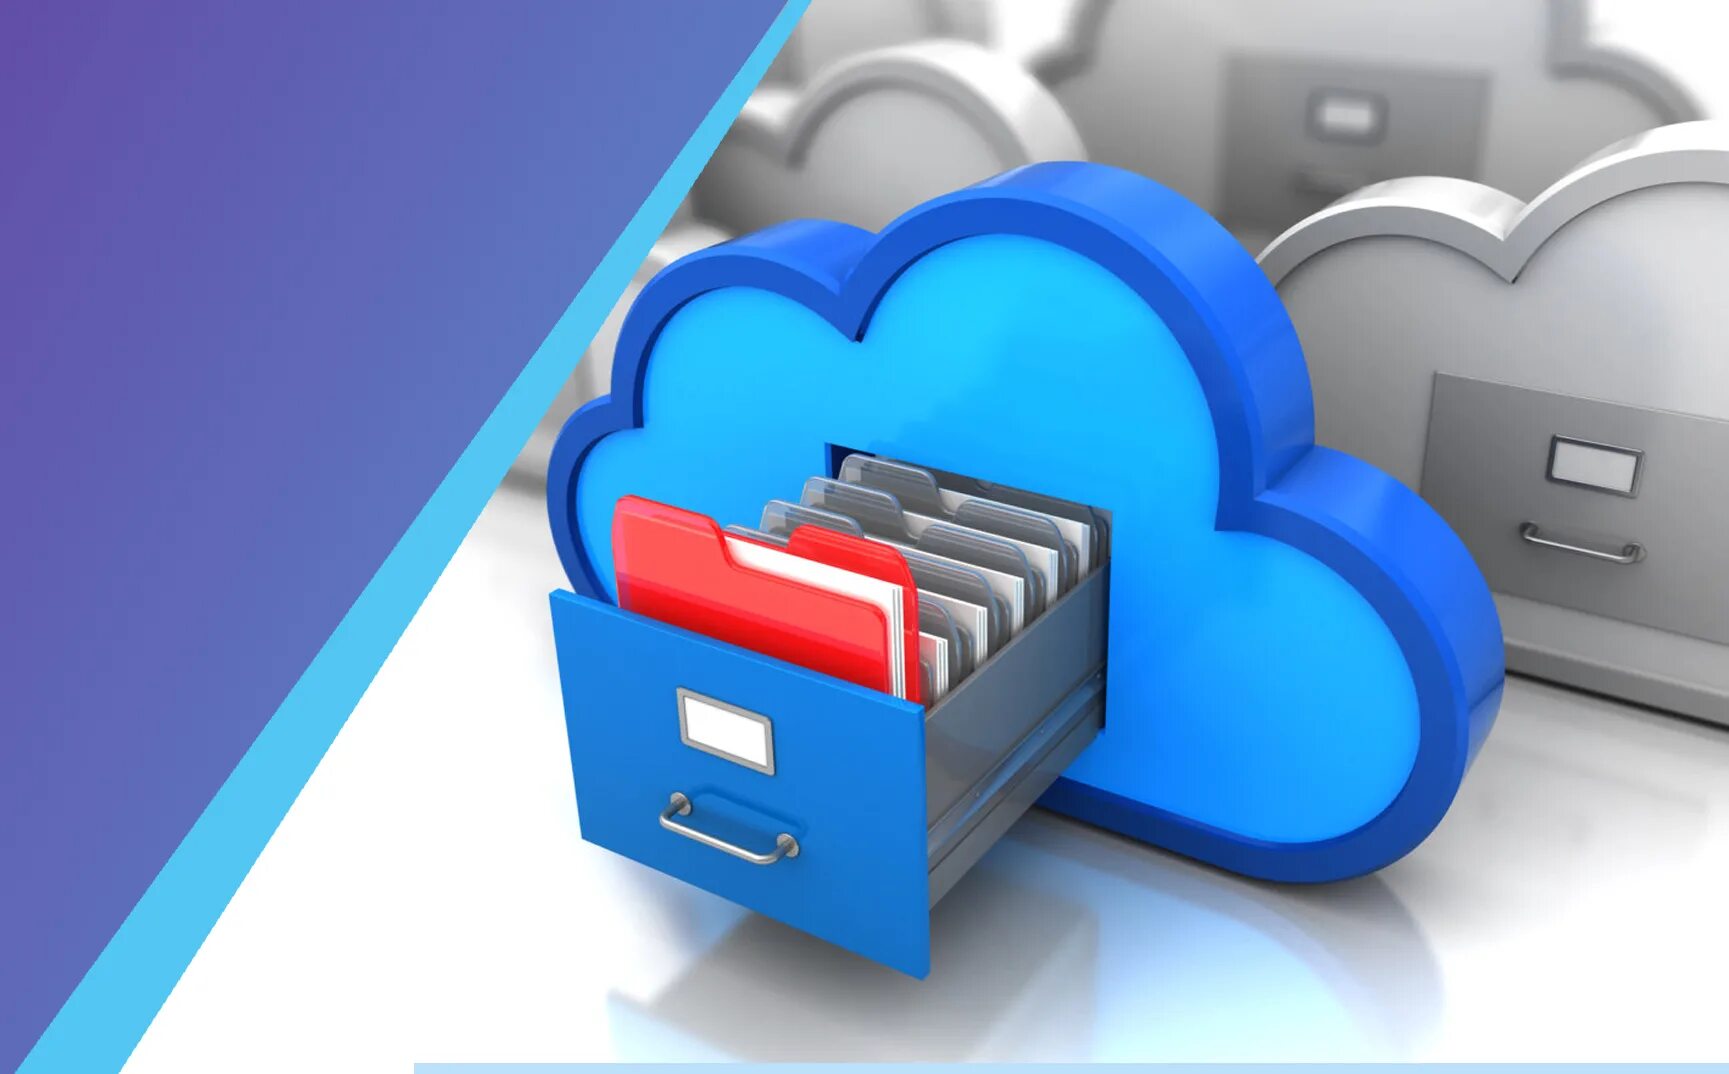 Хранение информации в интернете. Облако хранения. Файловое хранилище. Файловое облако. Облачное хранилище картинки.